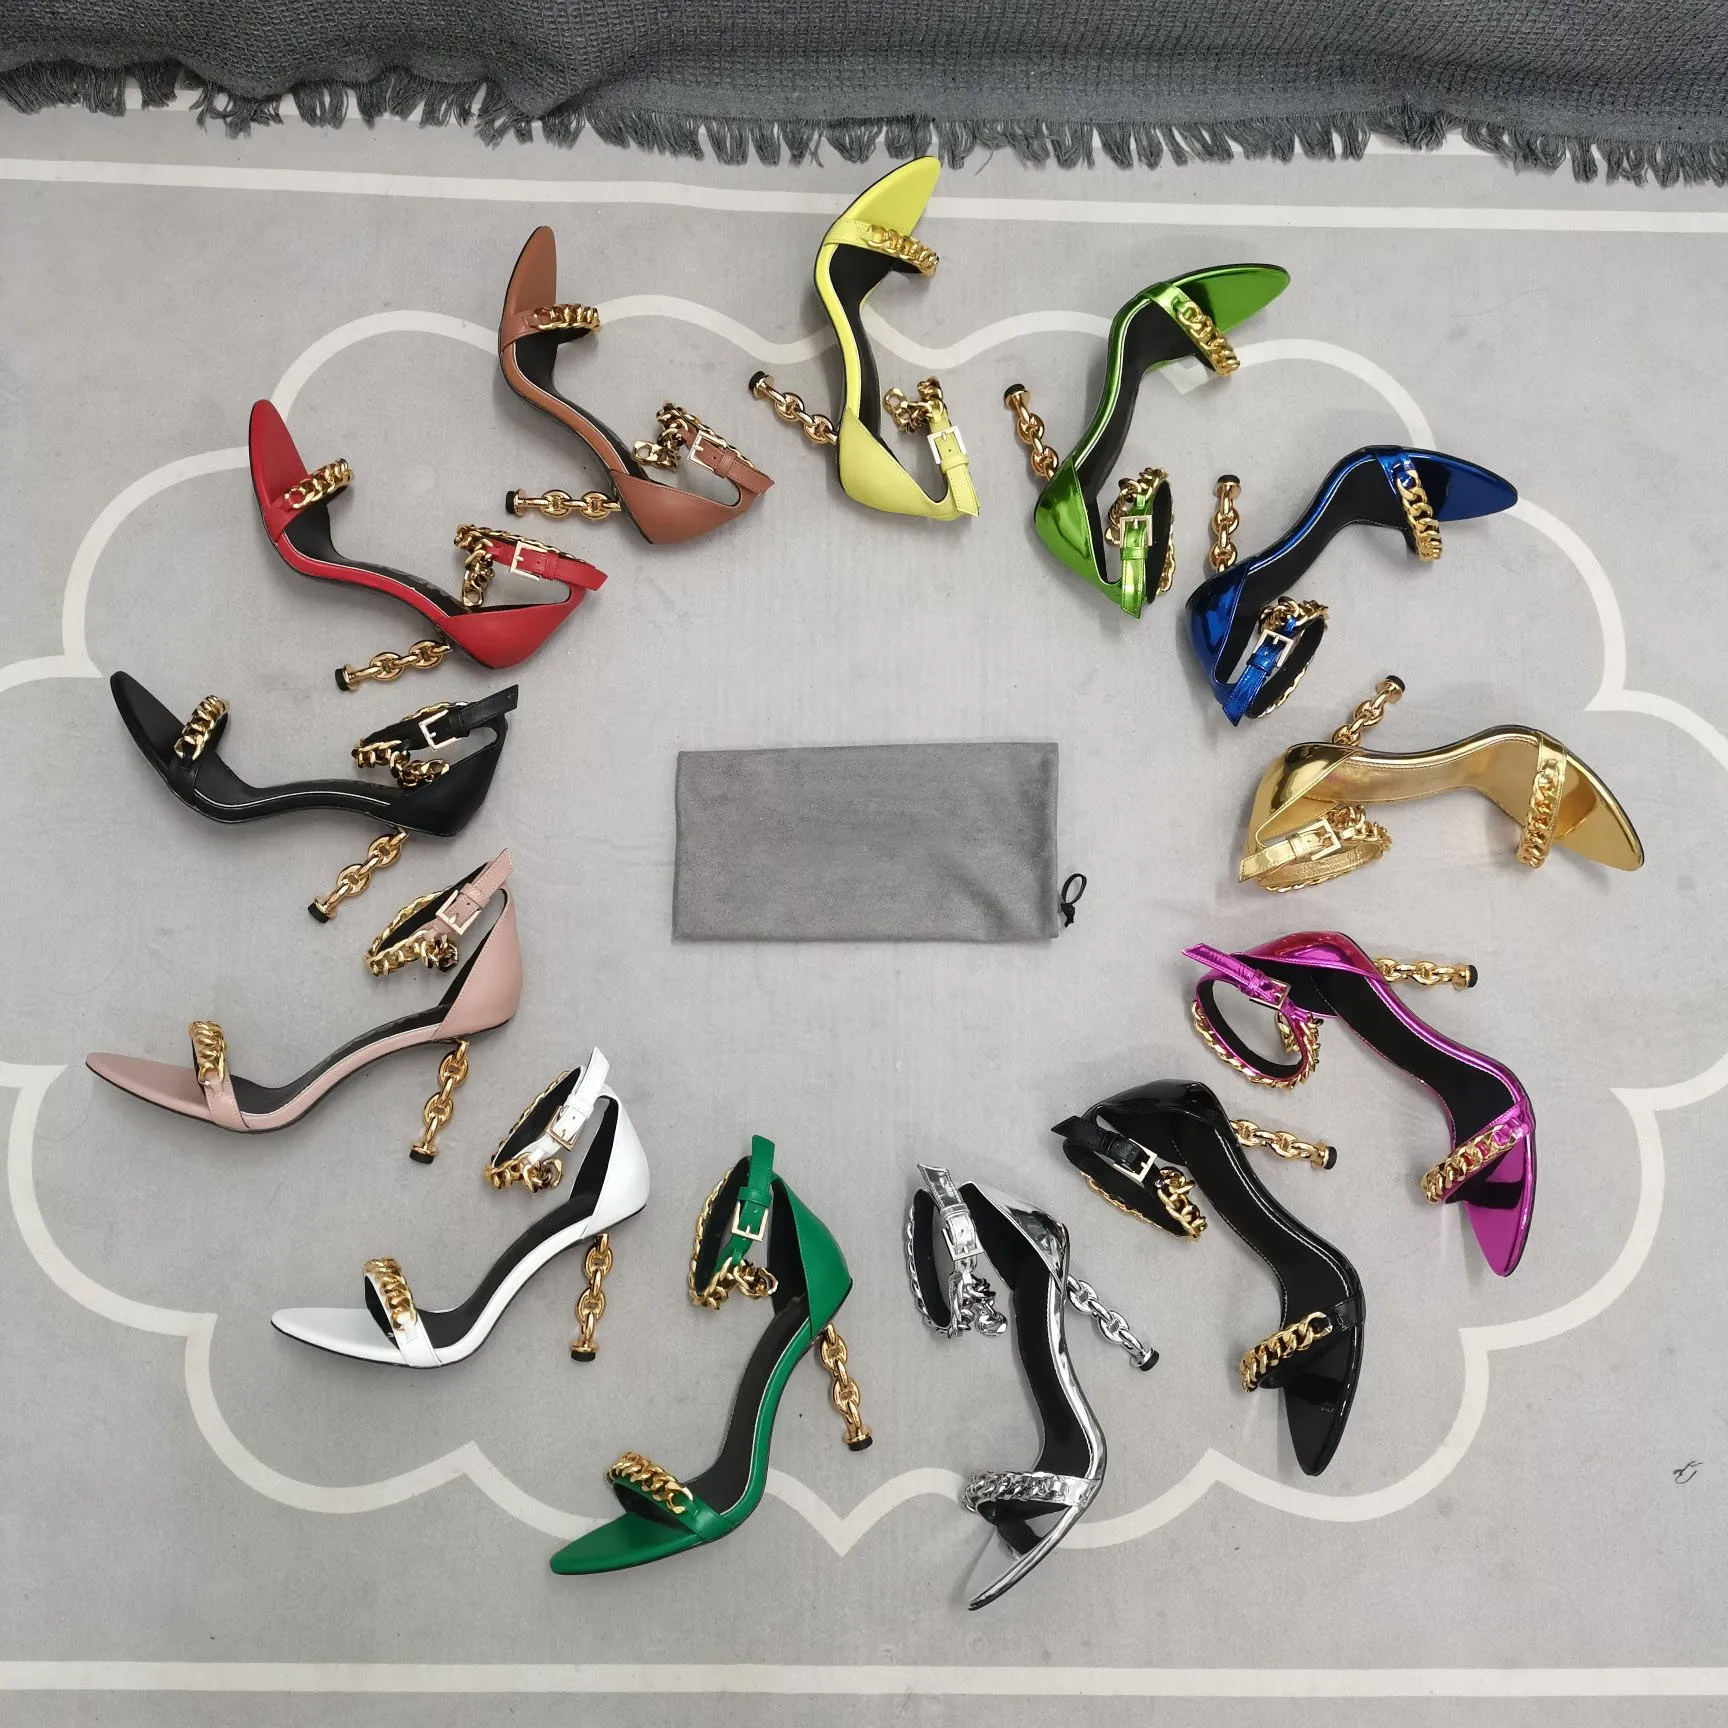 105mm kedja läder sandaler glider klackade öppet tå sko metall läder yttersula kvinnors lyxdesigners afton klänning festskor fabrikskor